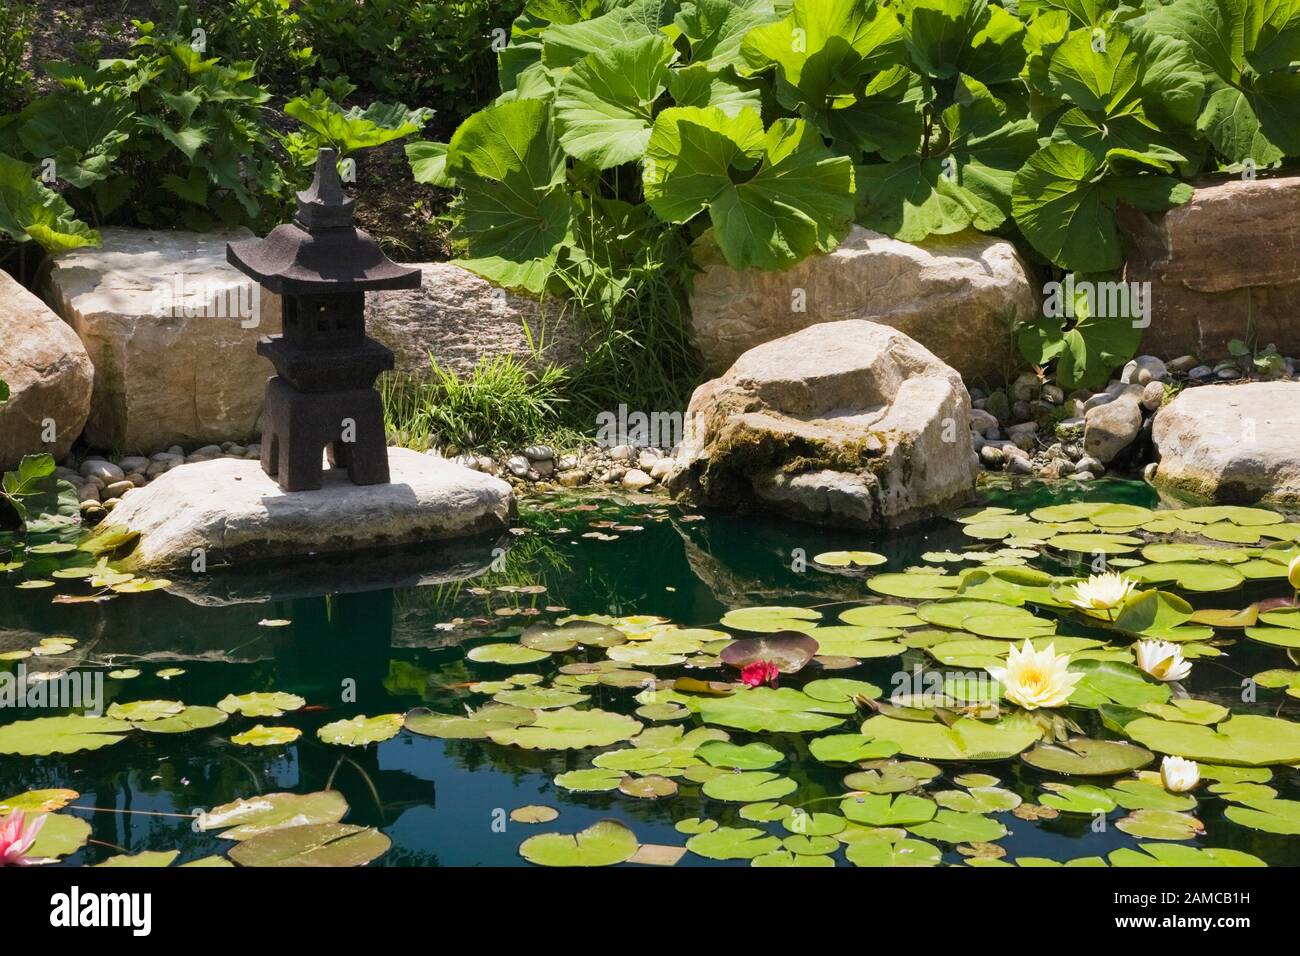 Pond with ornamental sculpture in the Zen garden at the 'Route des Gerbes d'Angelica' garden in spring, Mirabel, Quebec, Laurentians, Canada. Stock Photo